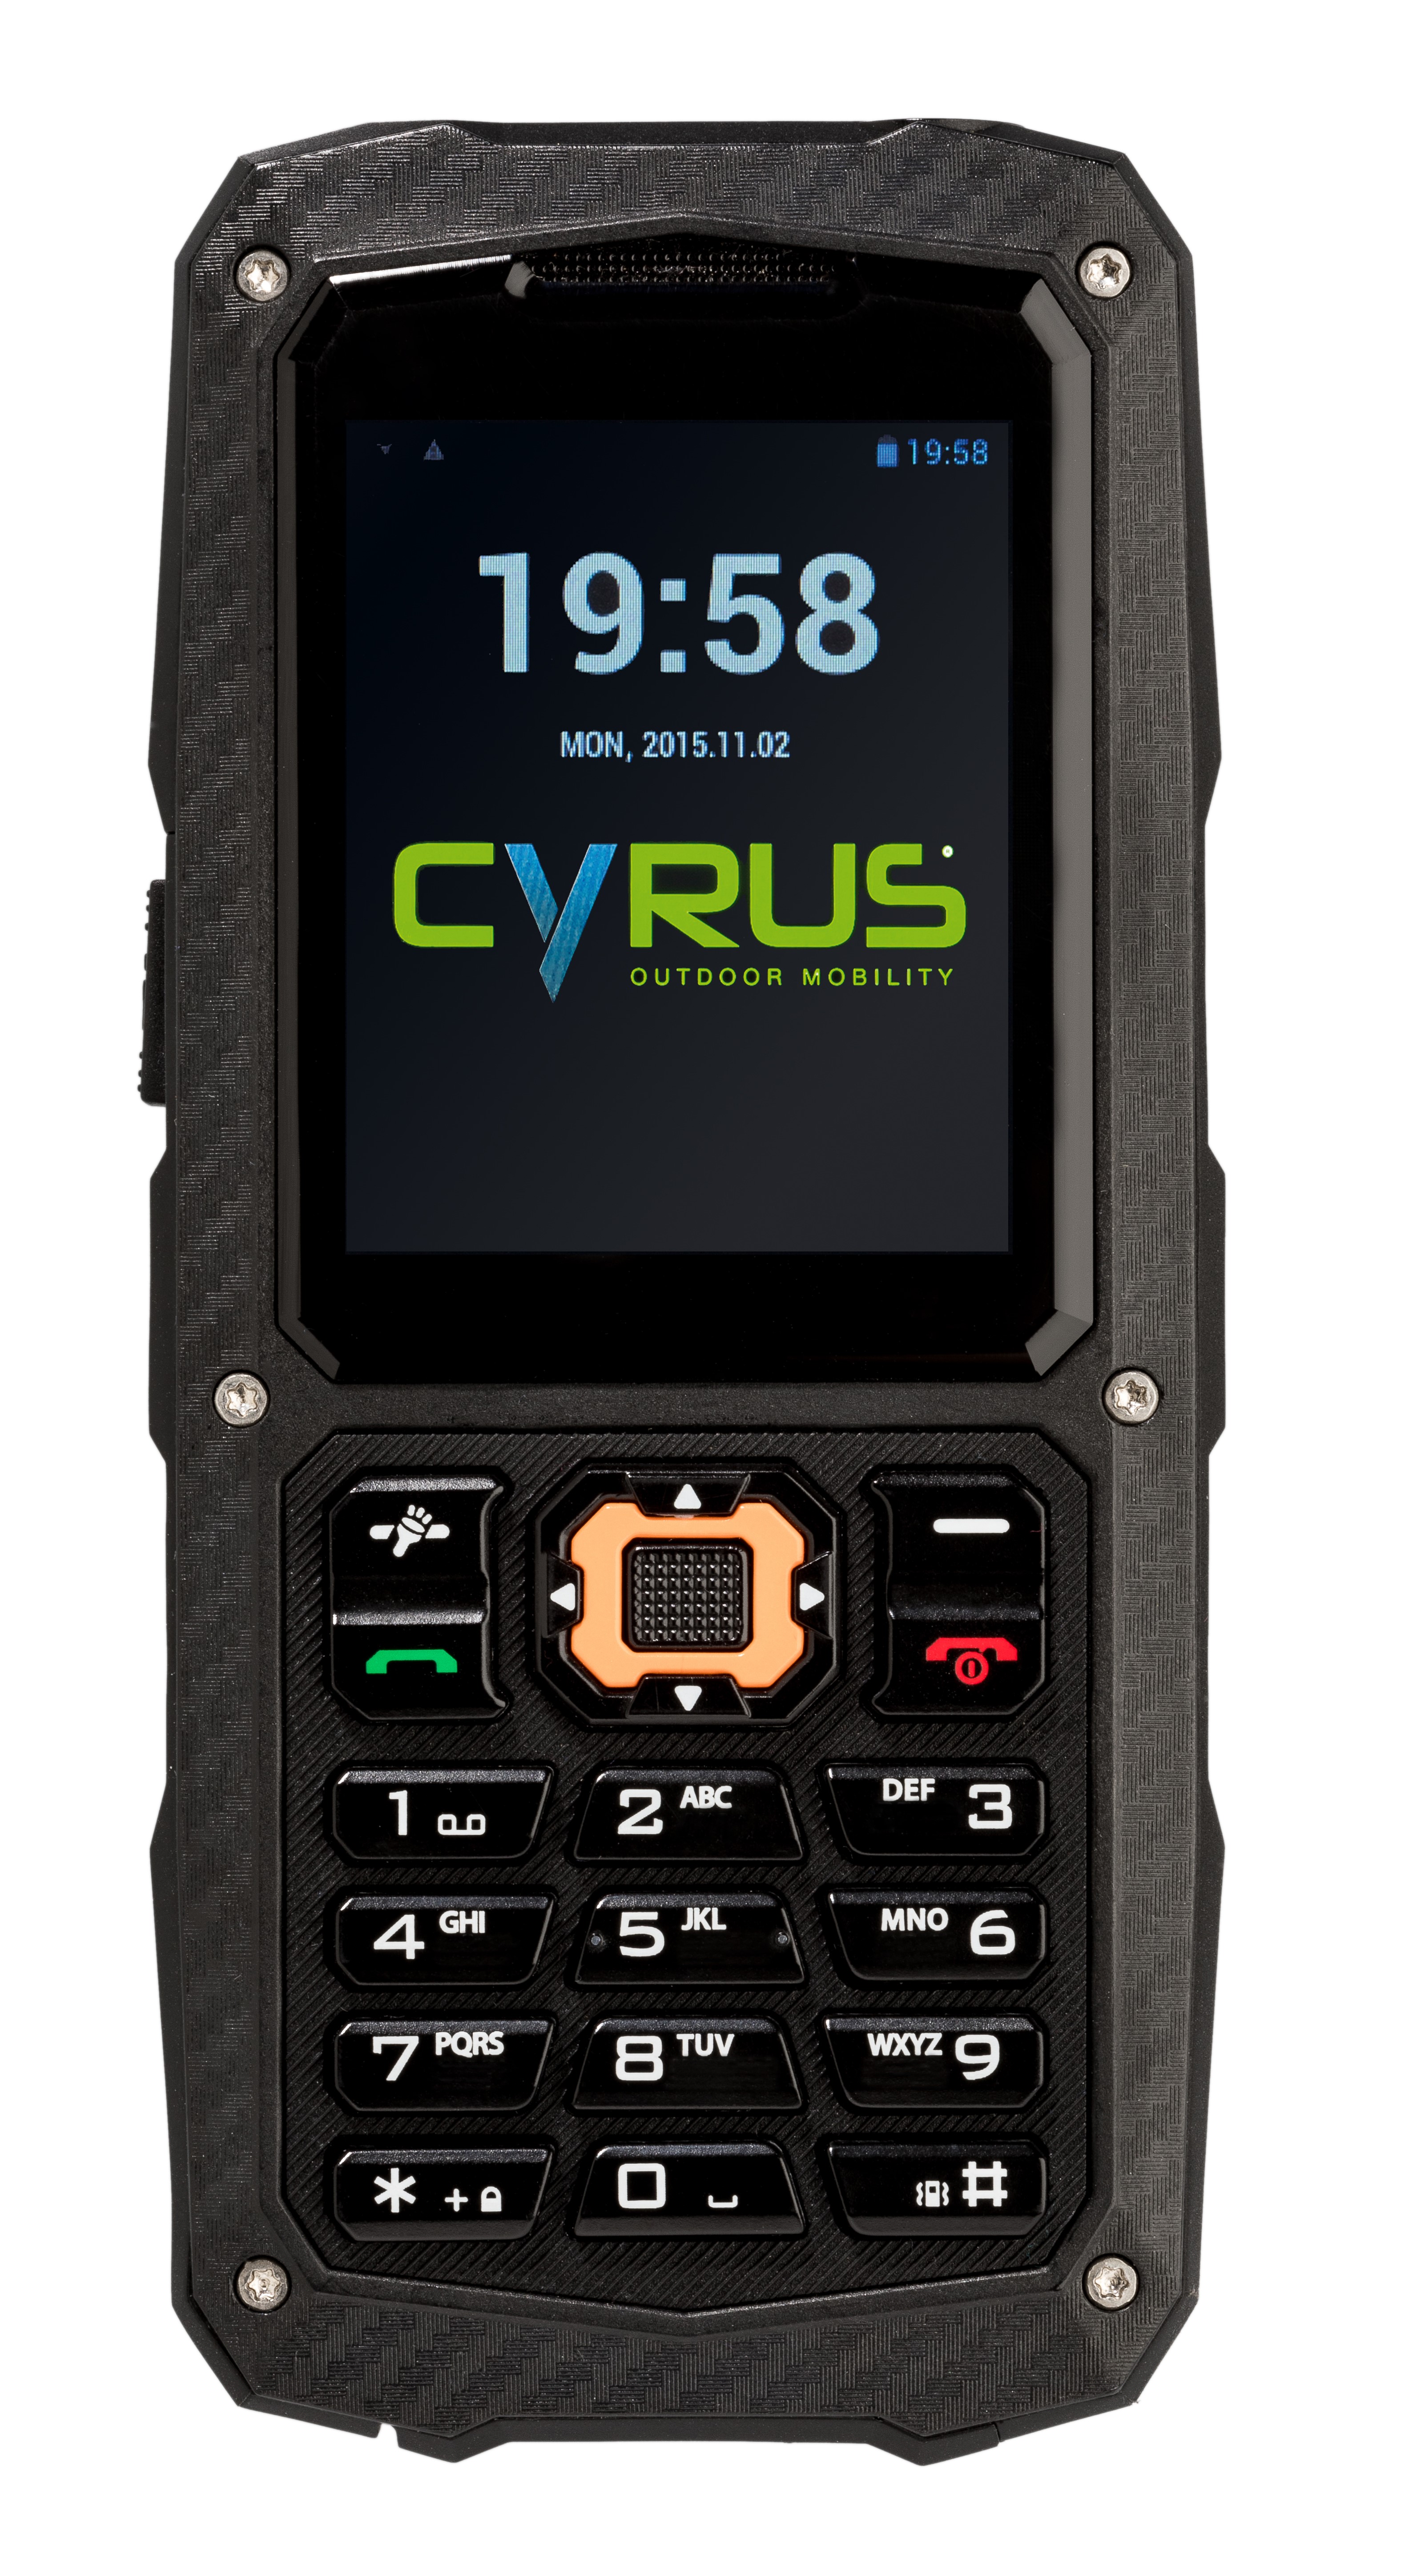 Cyrus CM8 SOLID Mobiltelefon Dual SIM microSDHC slot GSM 220 x 176 Pixel RAM 128MB 1,3 MP (CYR10119)  - Onlineshop JACOB Elektronik